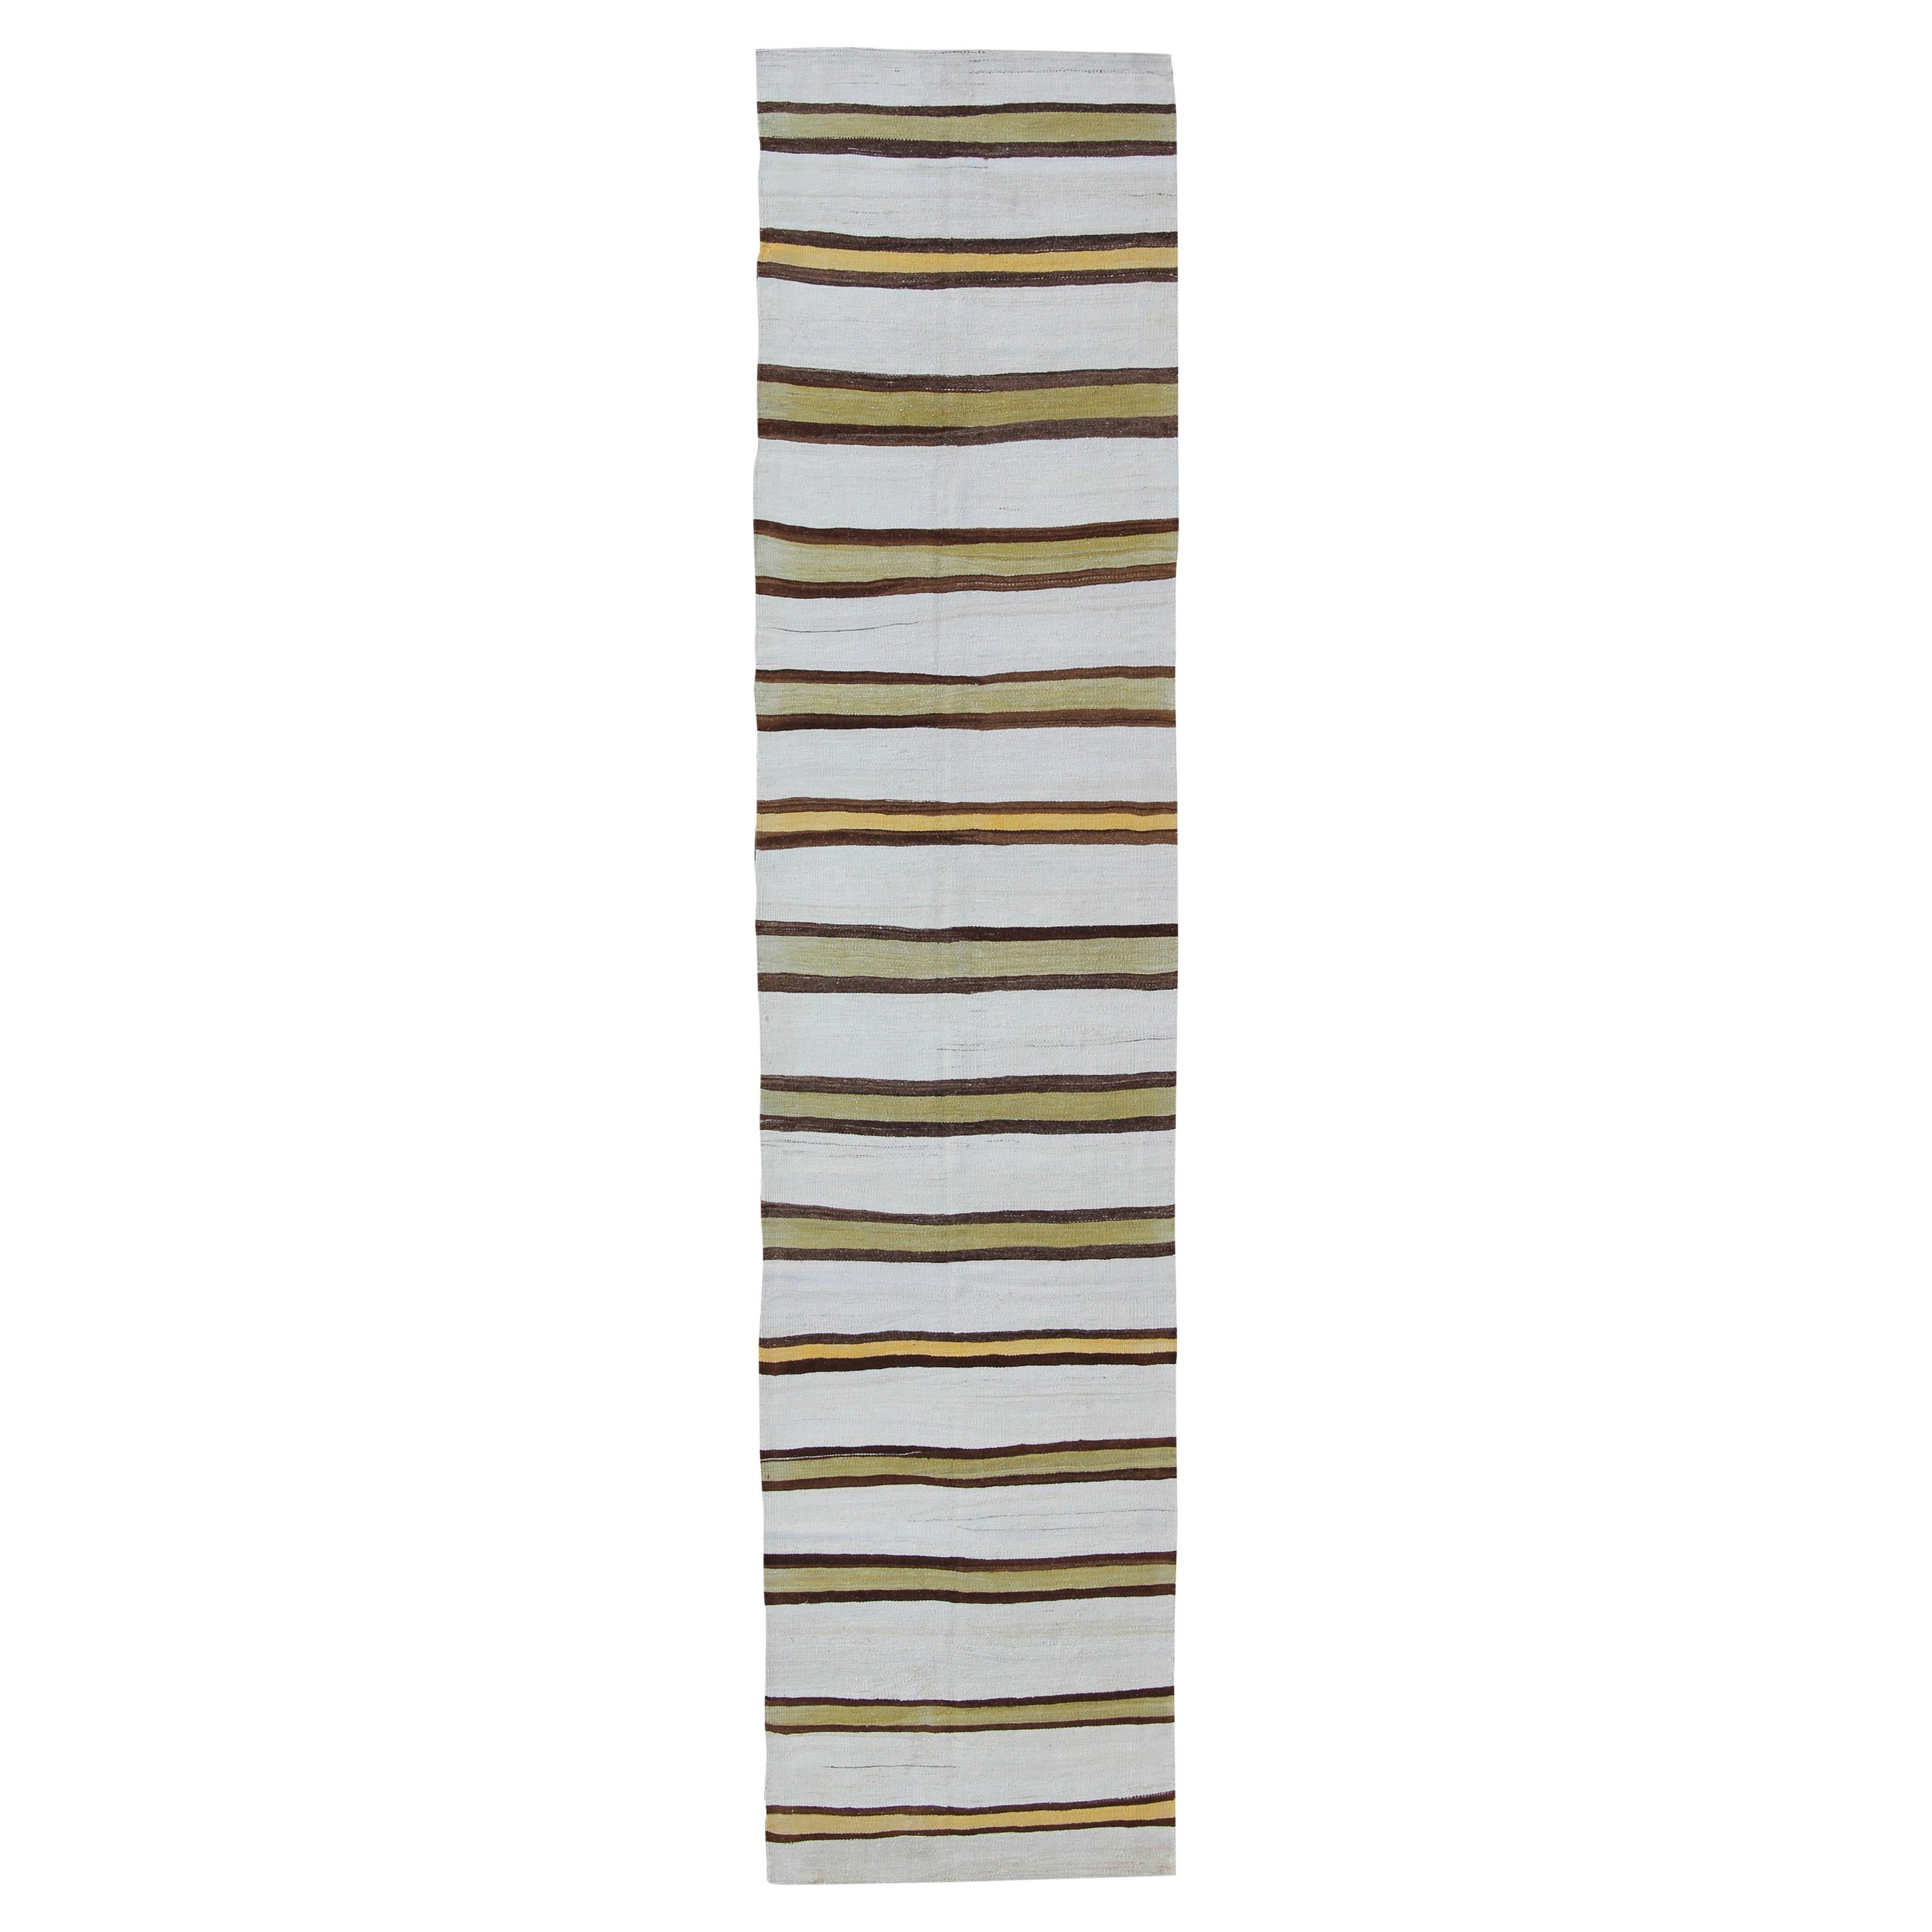 Vintage Turkish Striped Kilim Flat-Weave Runner in White, Yellow, Green, Brown